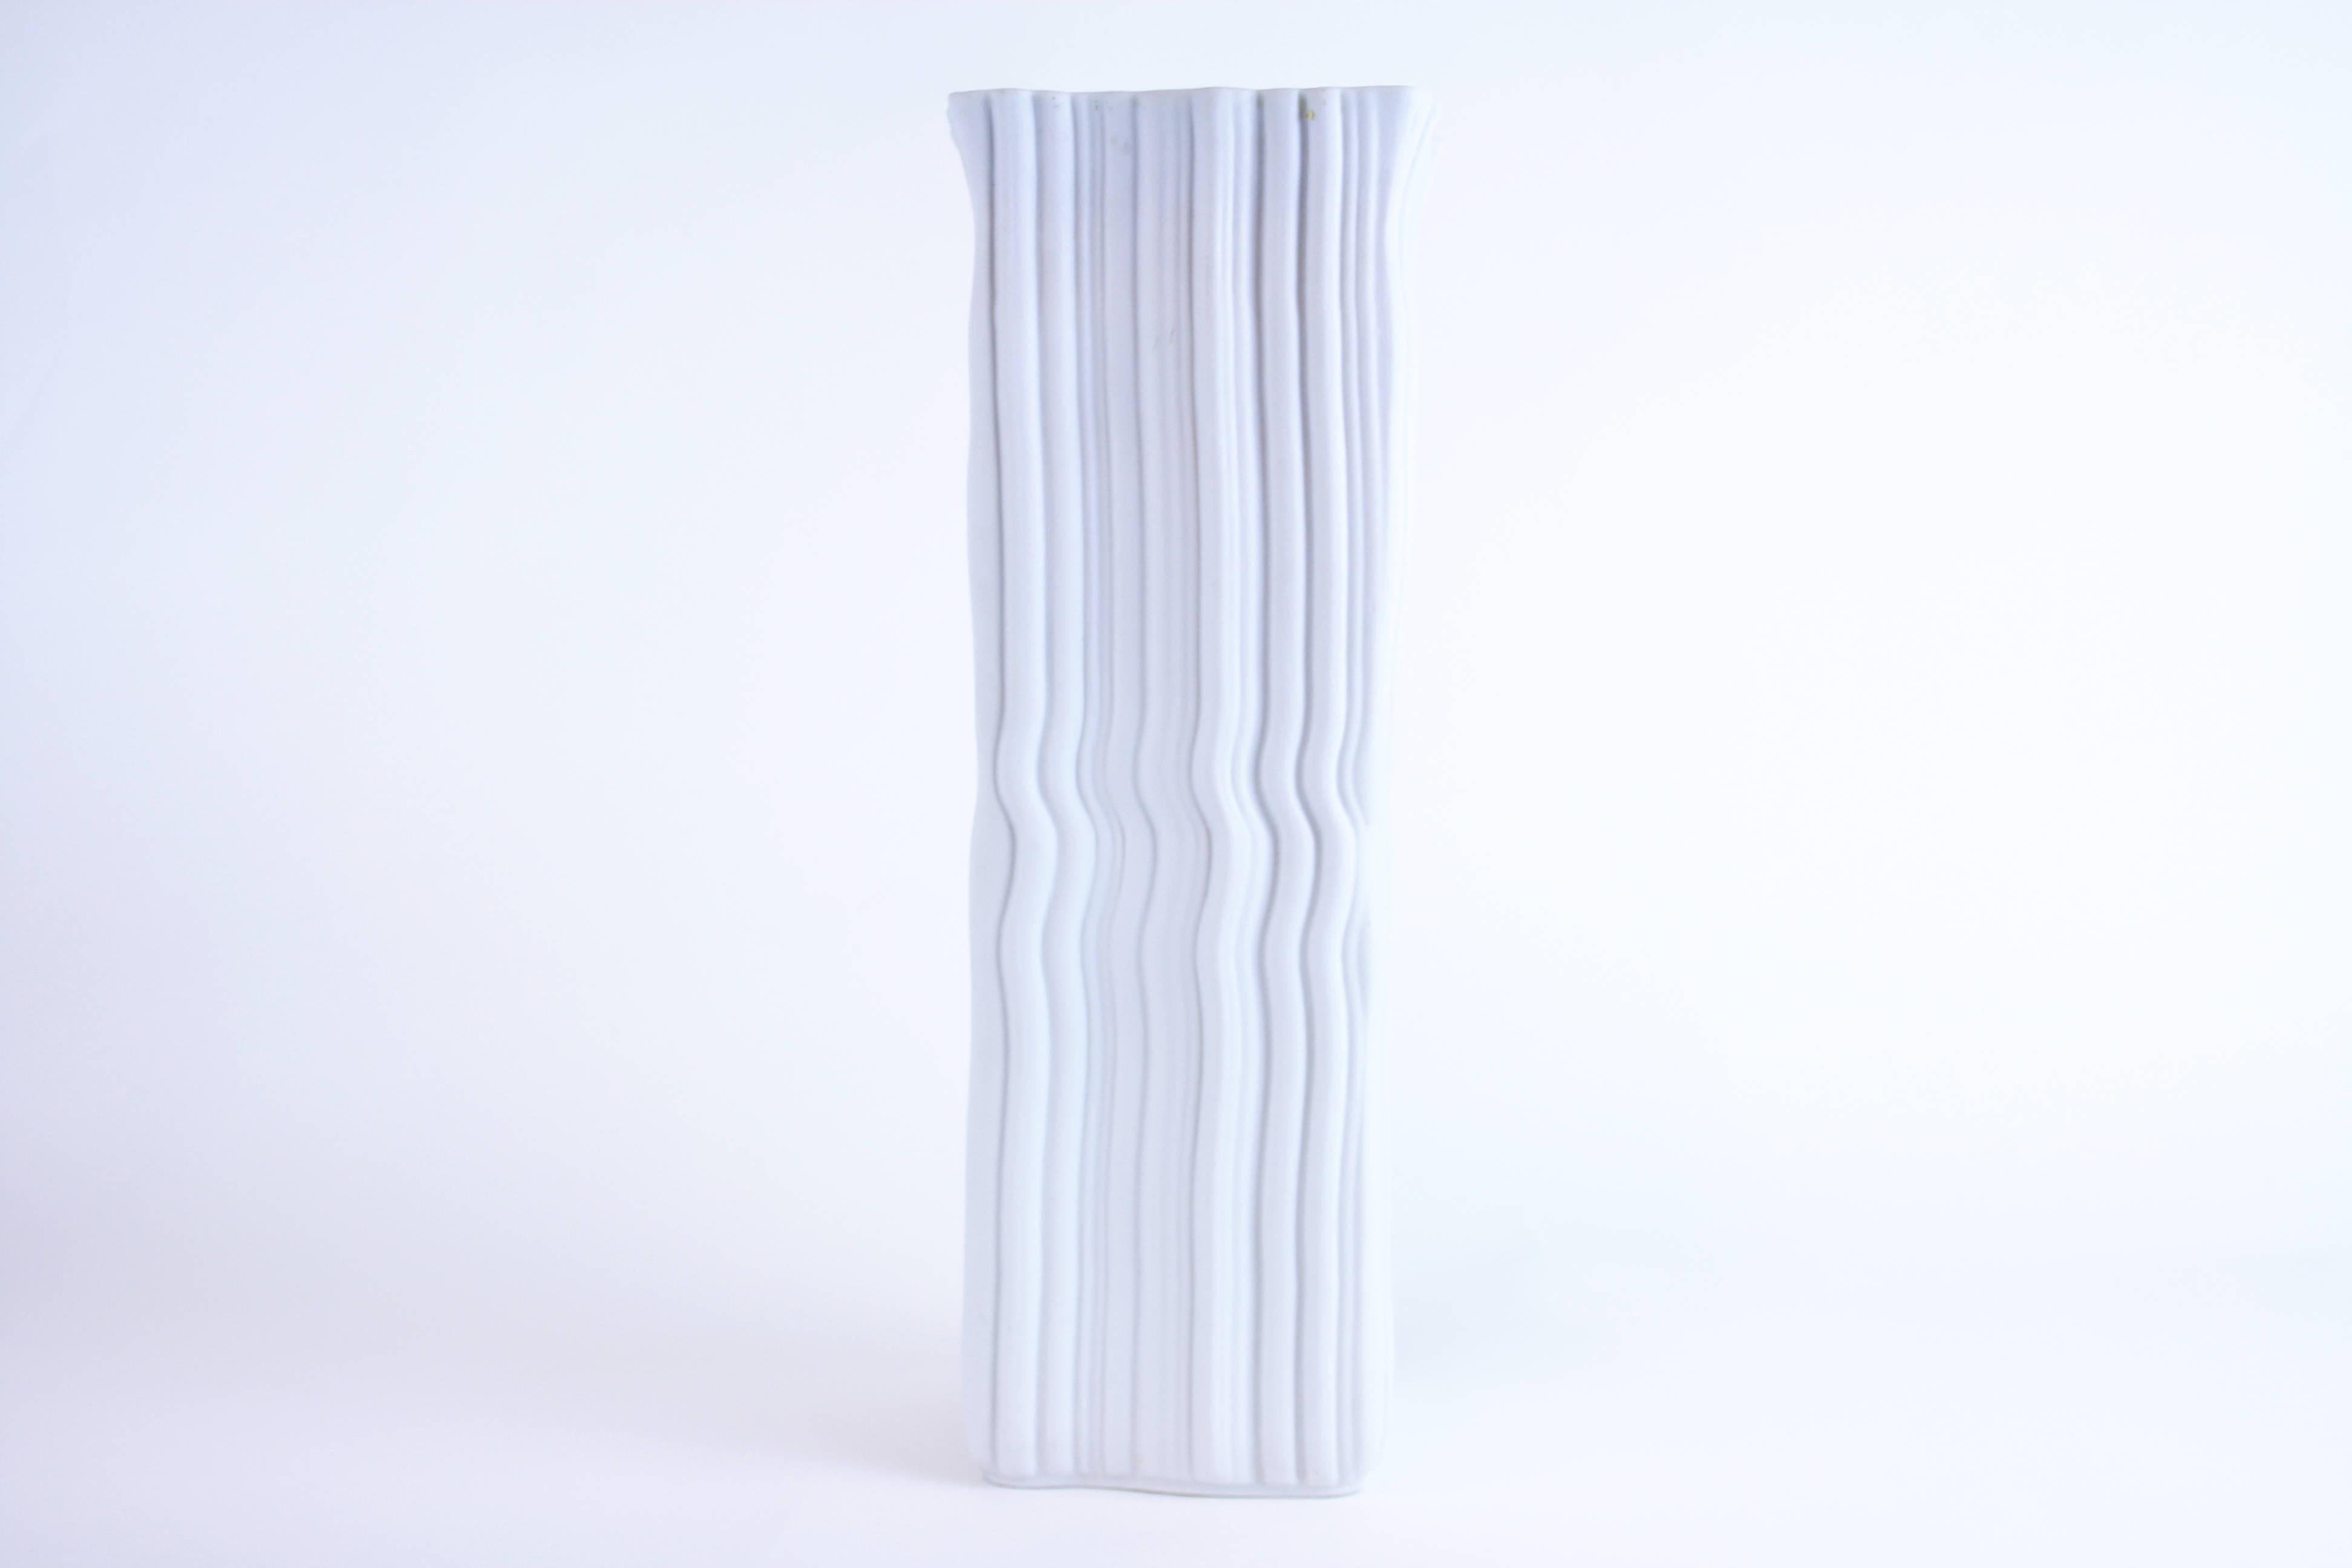 Vase White Bisquit Porcelain Design by Naaman Israel 1990s For Sale 1